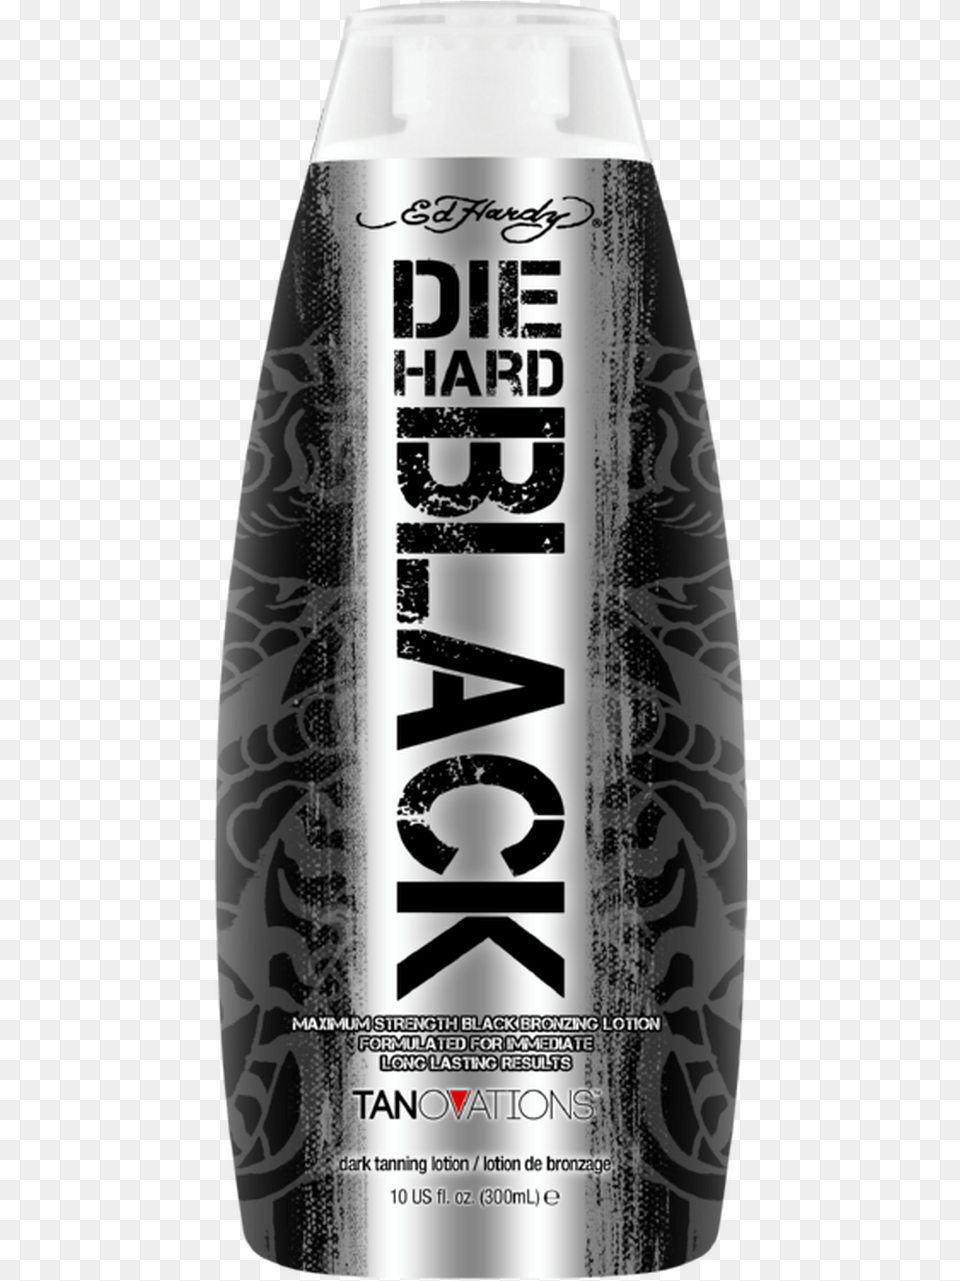 Ed Hardy Die Hard Black Maximum Strength Black Bronzing Energy Drink, Bottle, Can, Tin, Alcohol Free Png